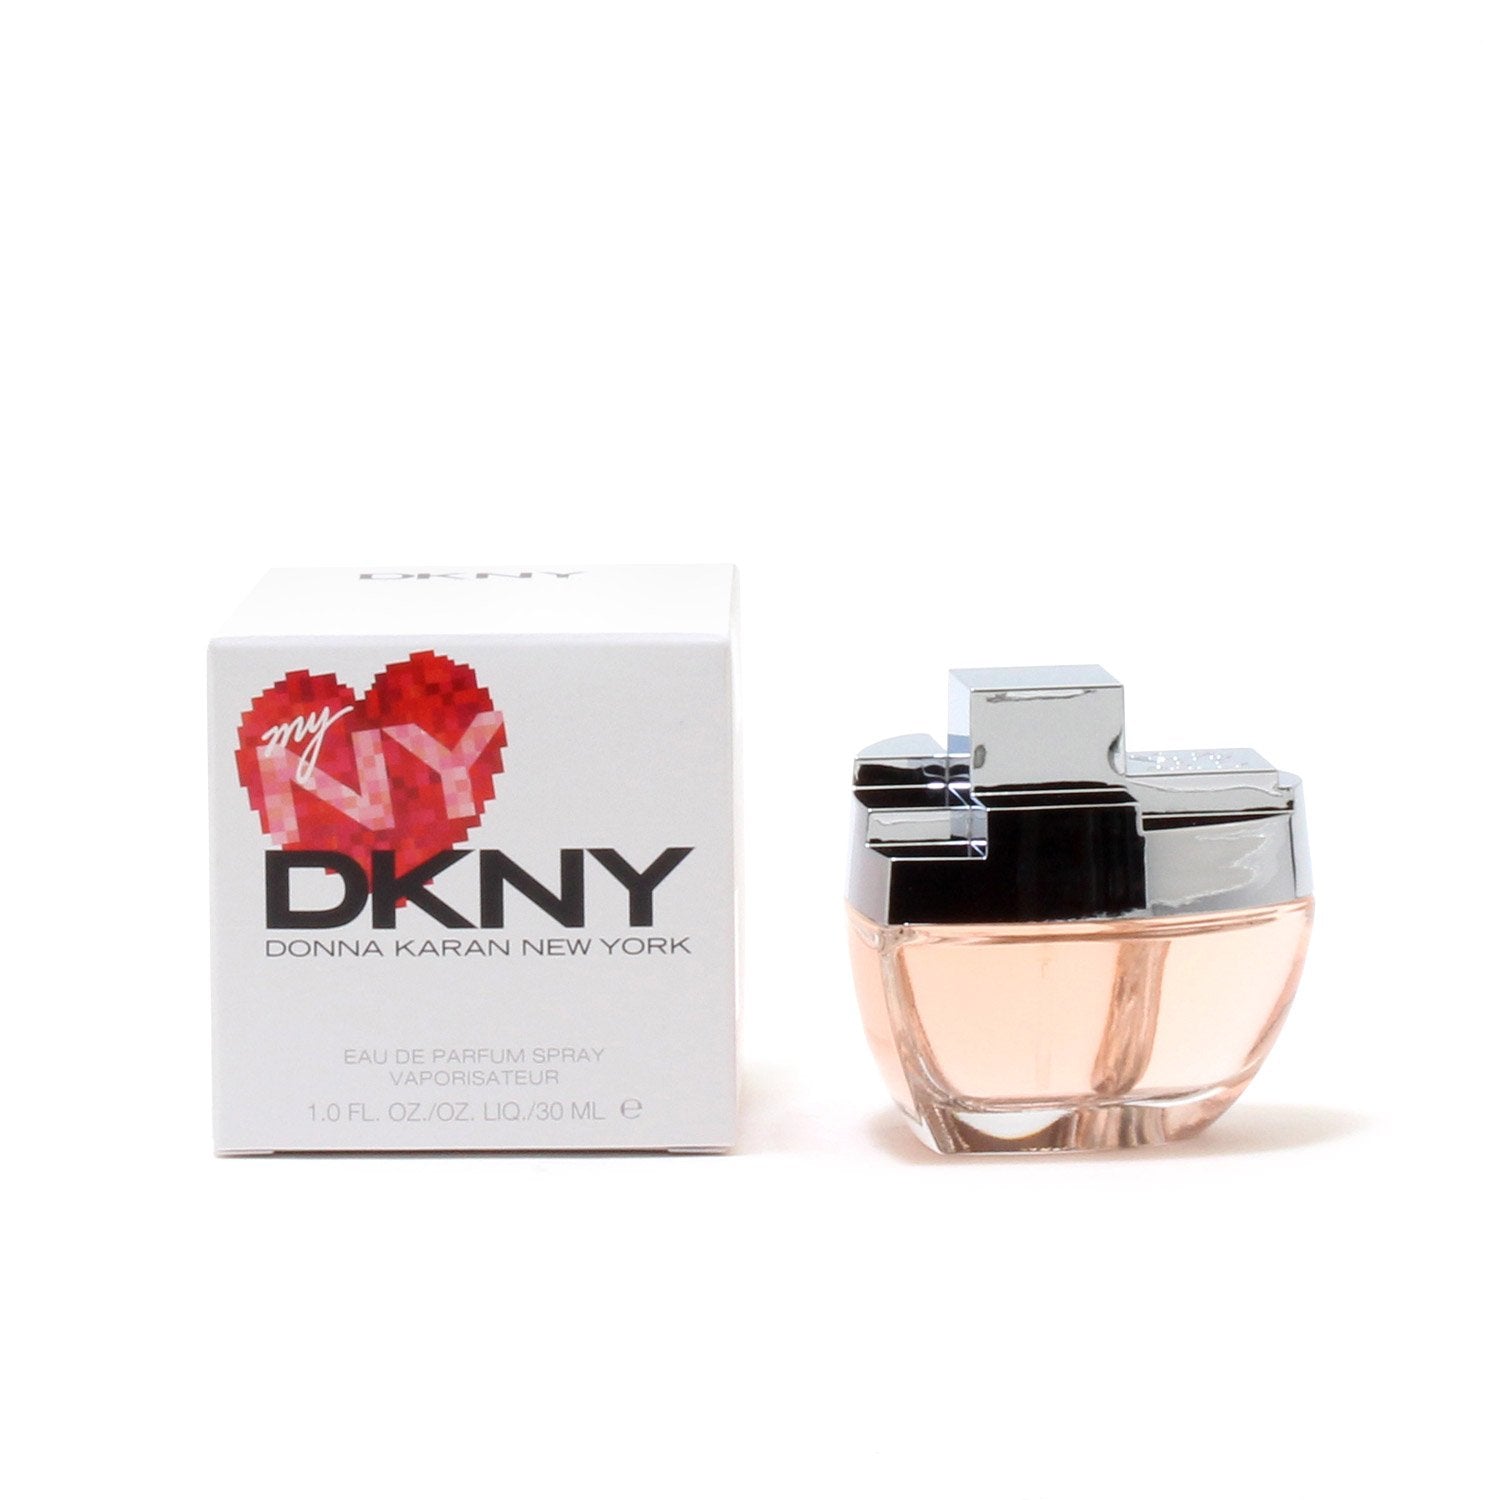 Perfume - DKNY MY NY FOR WOMEN BY DONNA KARAN - EAU DE PARFUM SPRAY